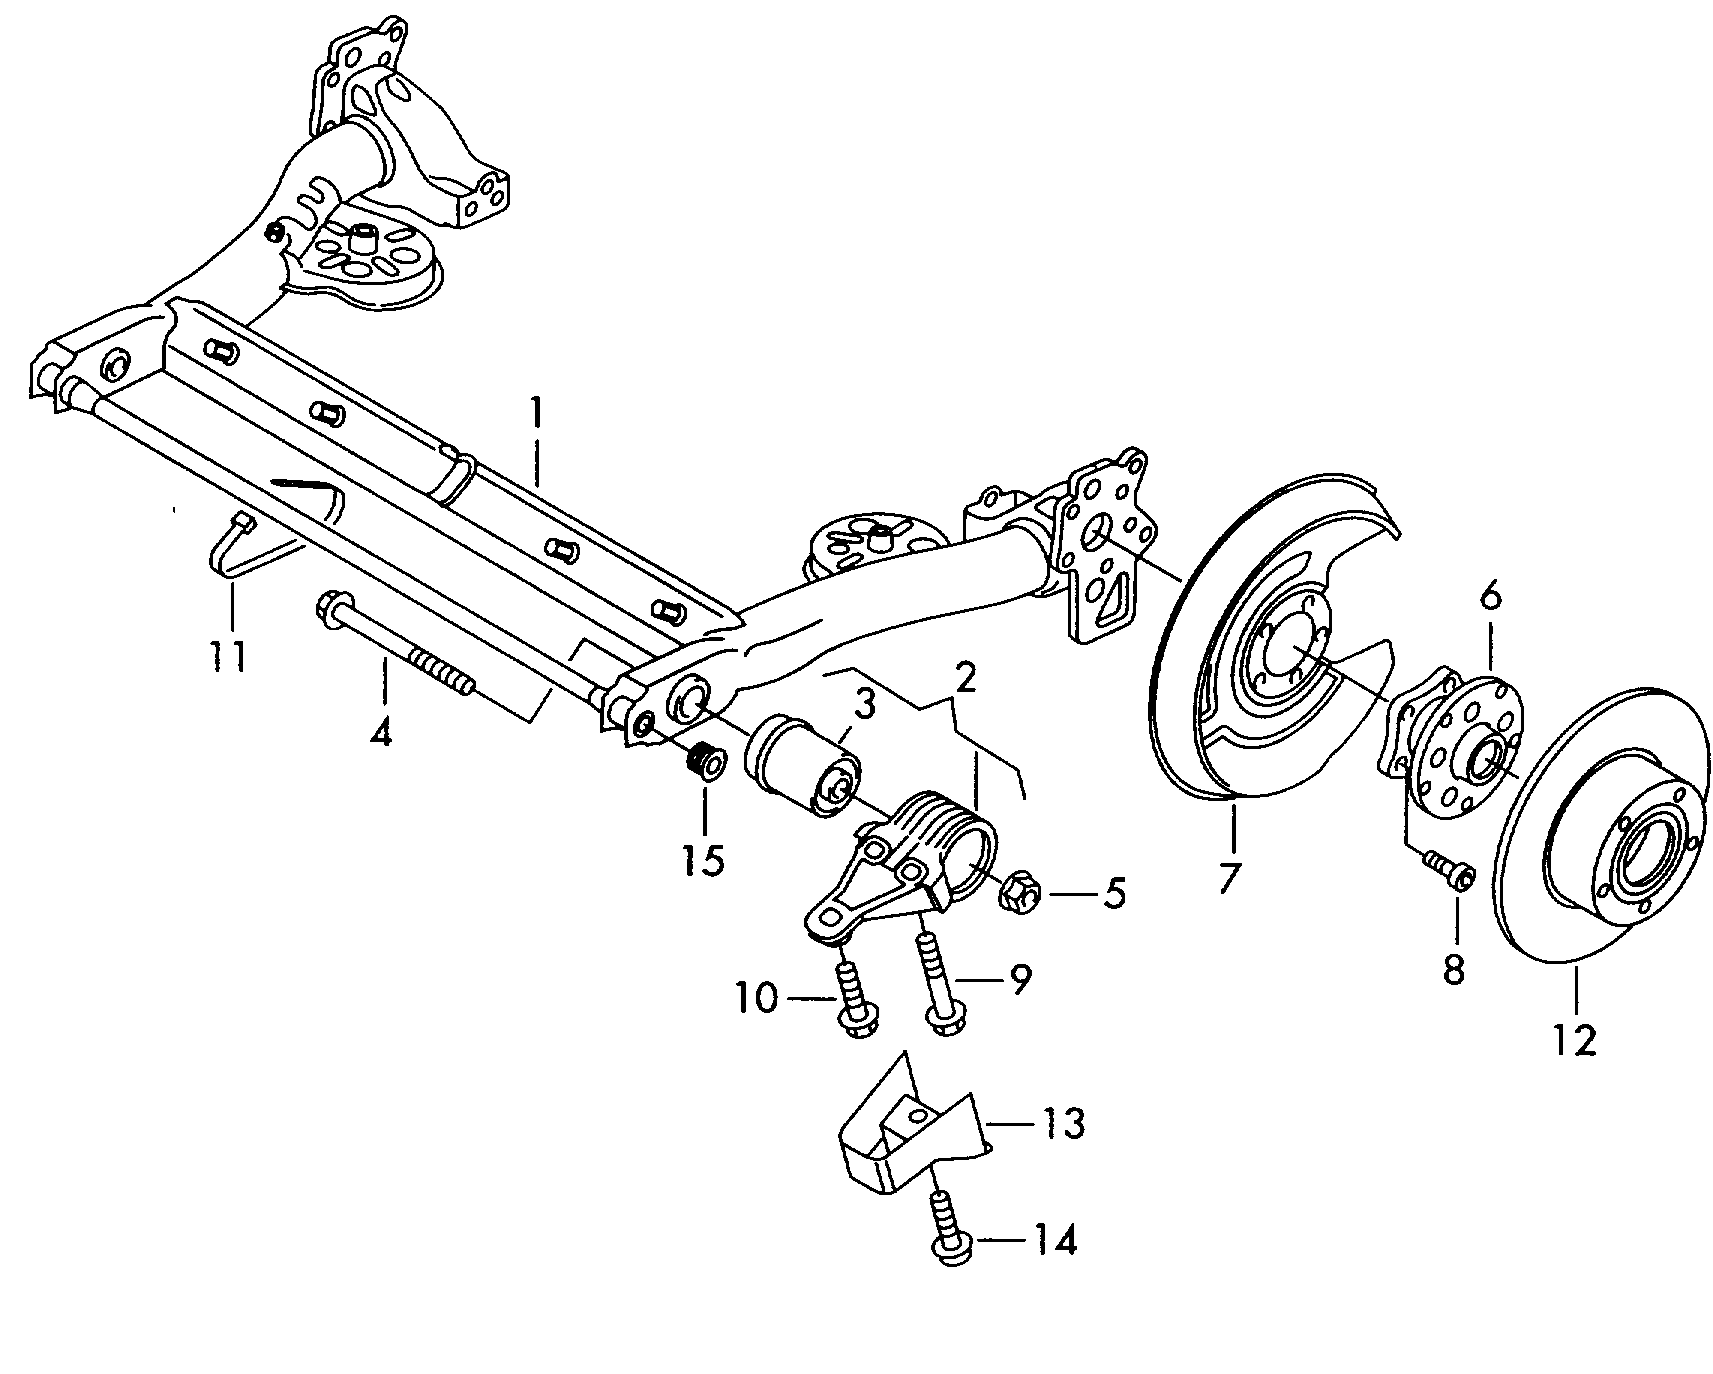 rear axle beam with attachment
parts - Passat/4Motion/Santana(PA)  